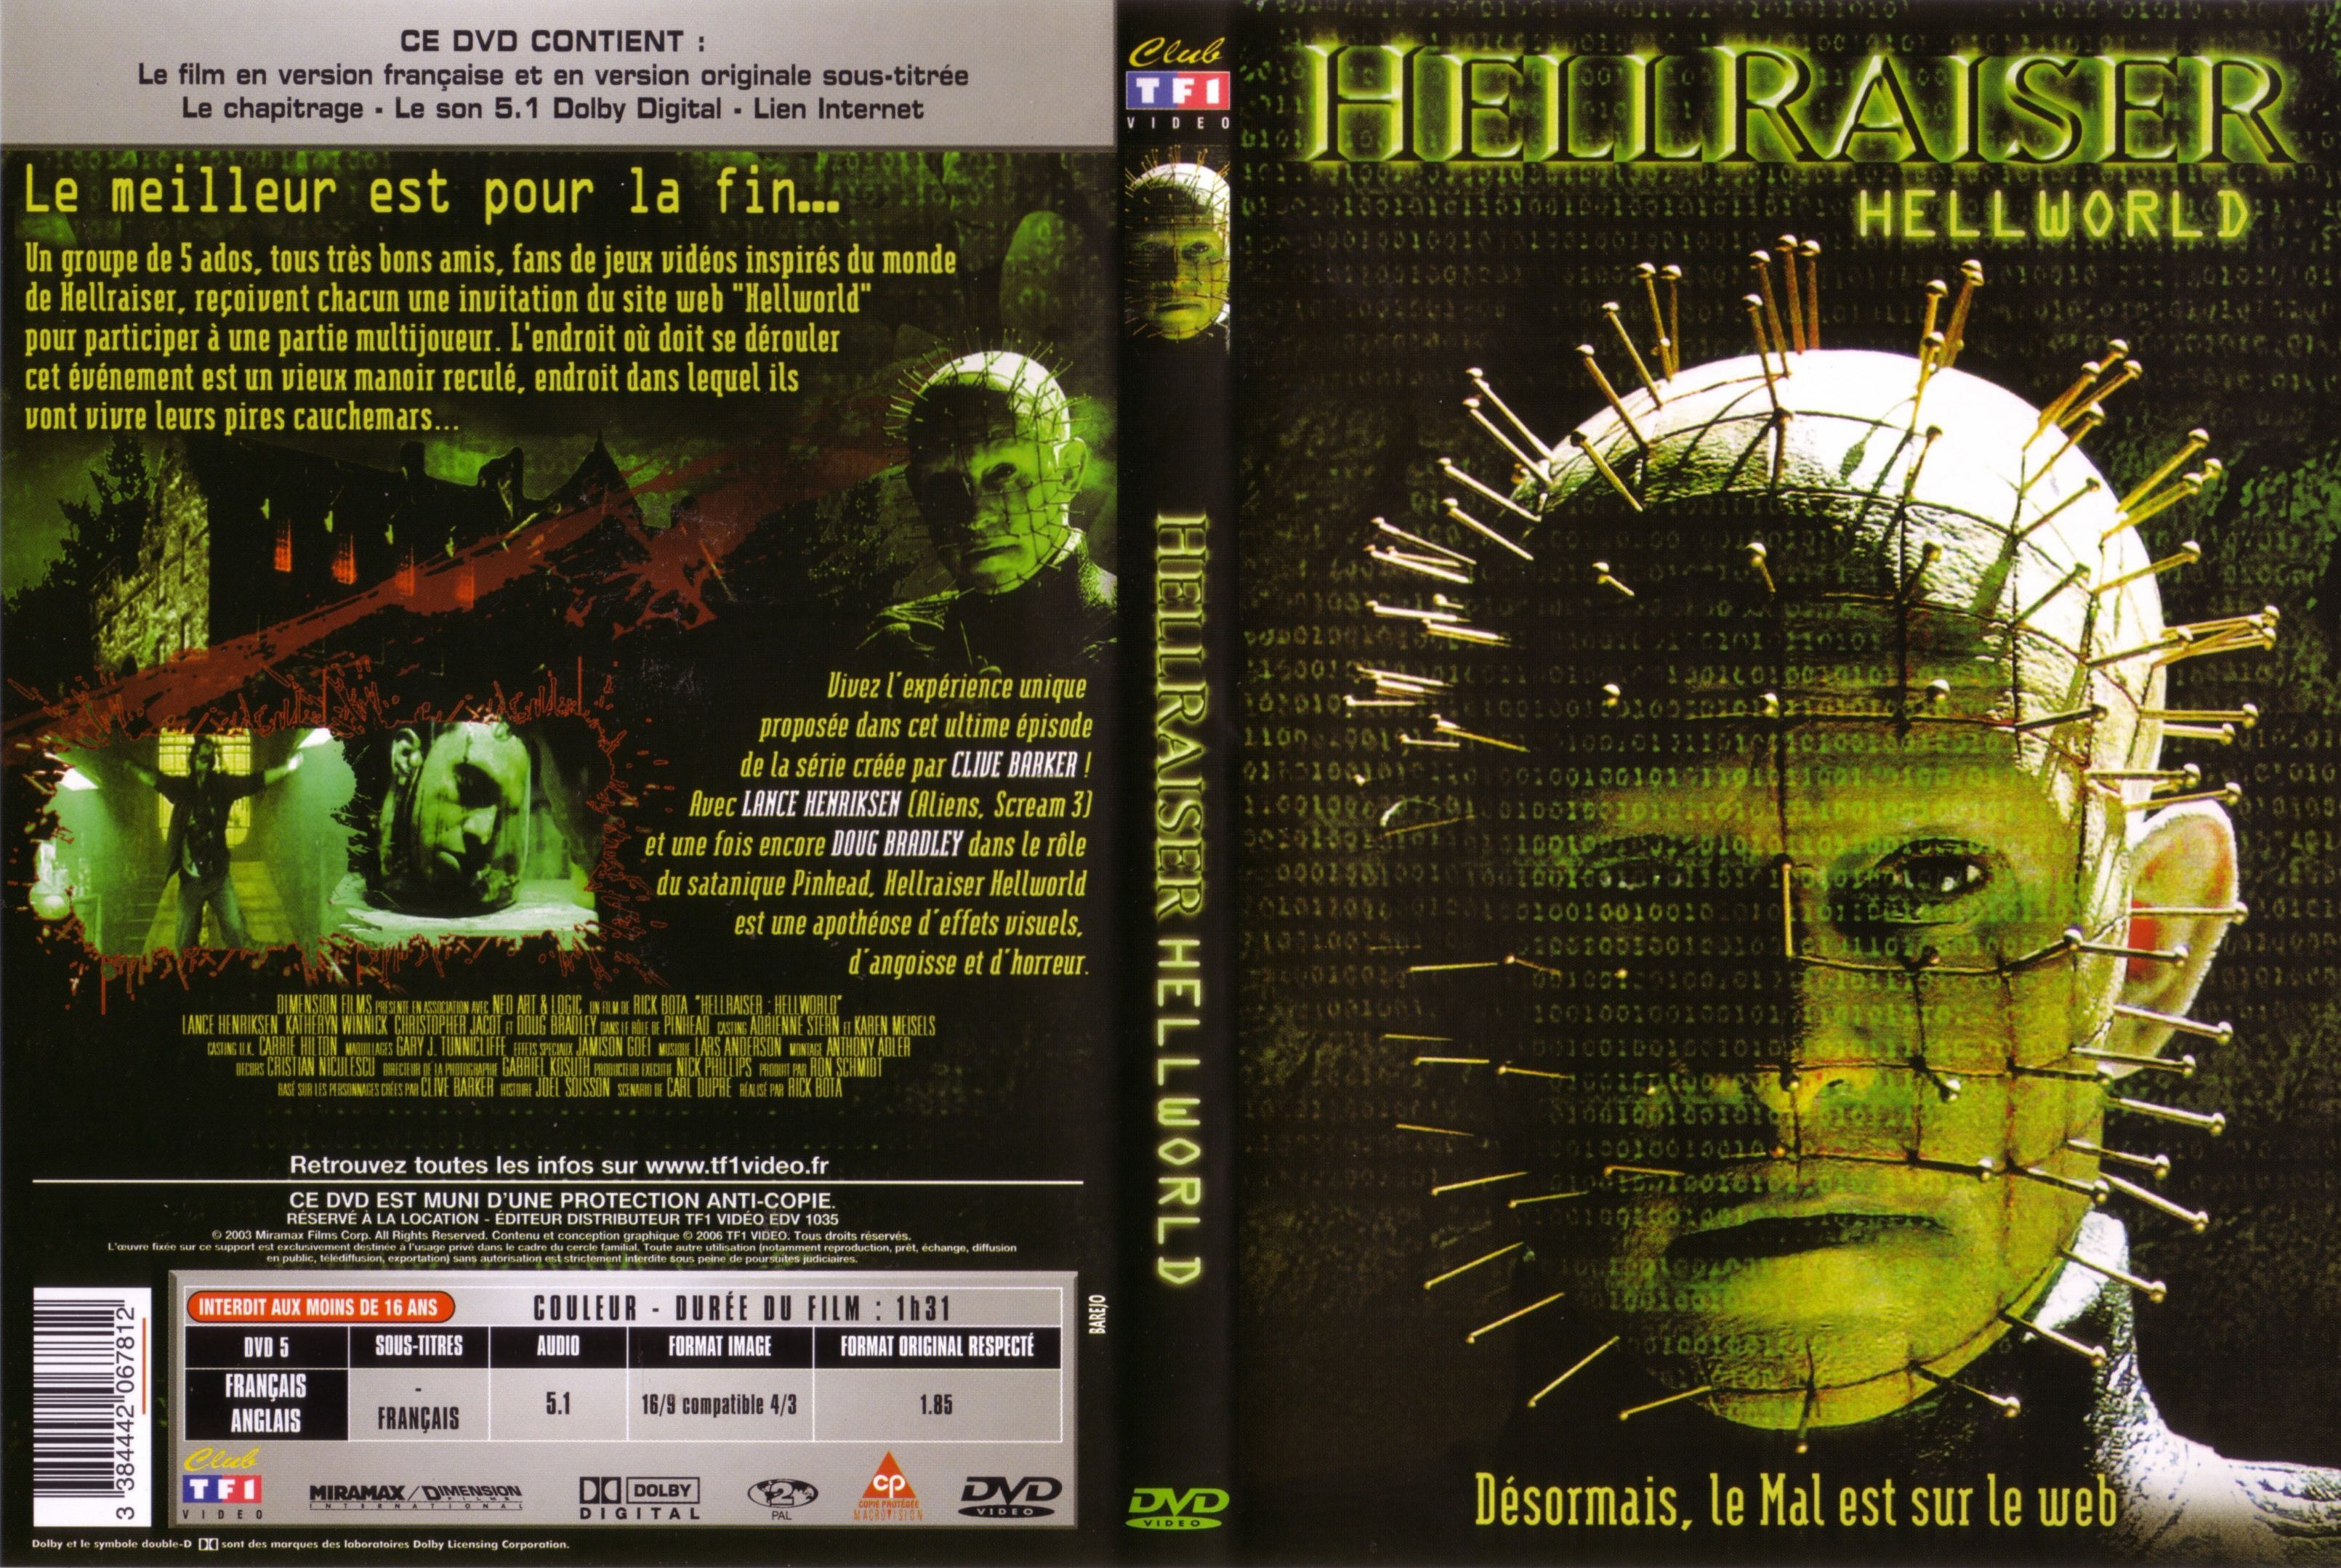 Jaquette DVD Hellraiser Hellword